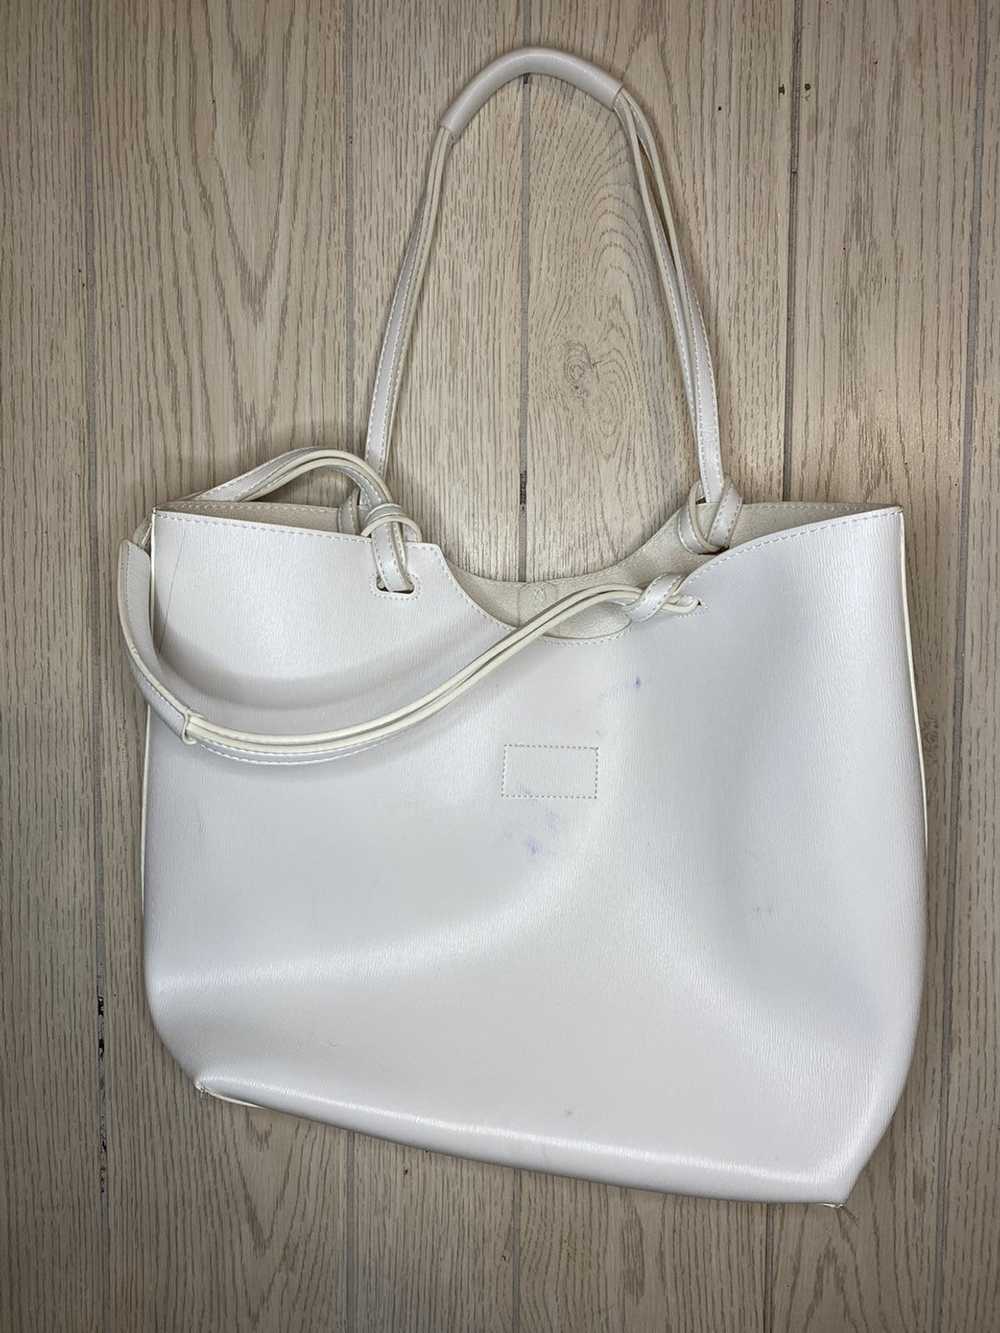 Neiman Marcus White Neiman Marcus Handbag Tote - image 9